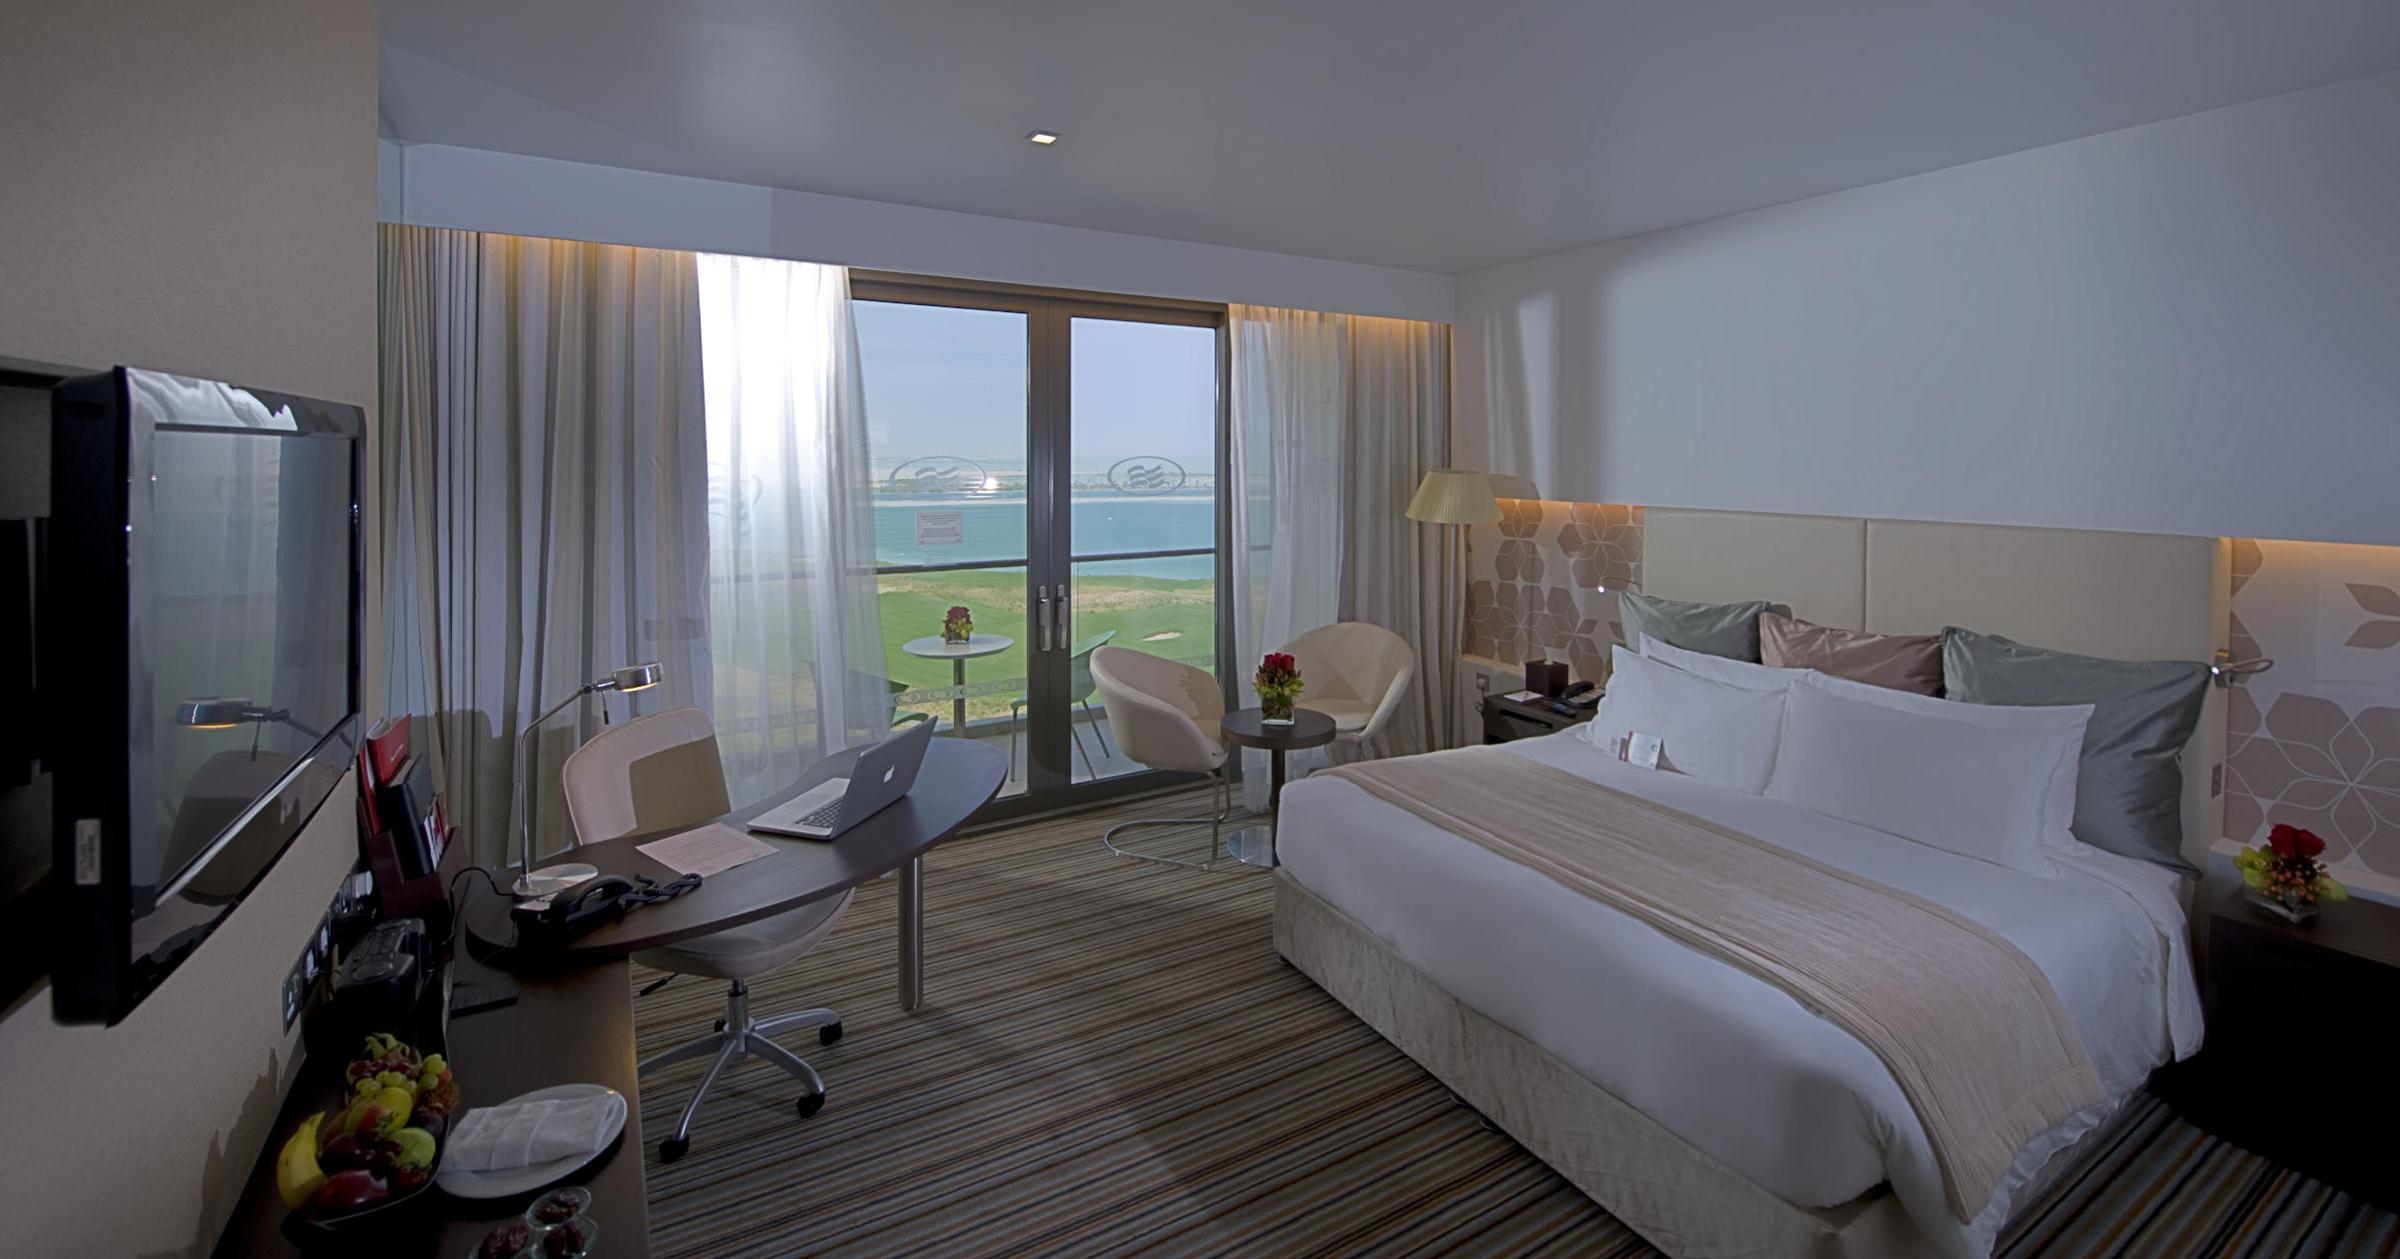 Hotel Crowne Plaza Abu Dhabi - Yas Island